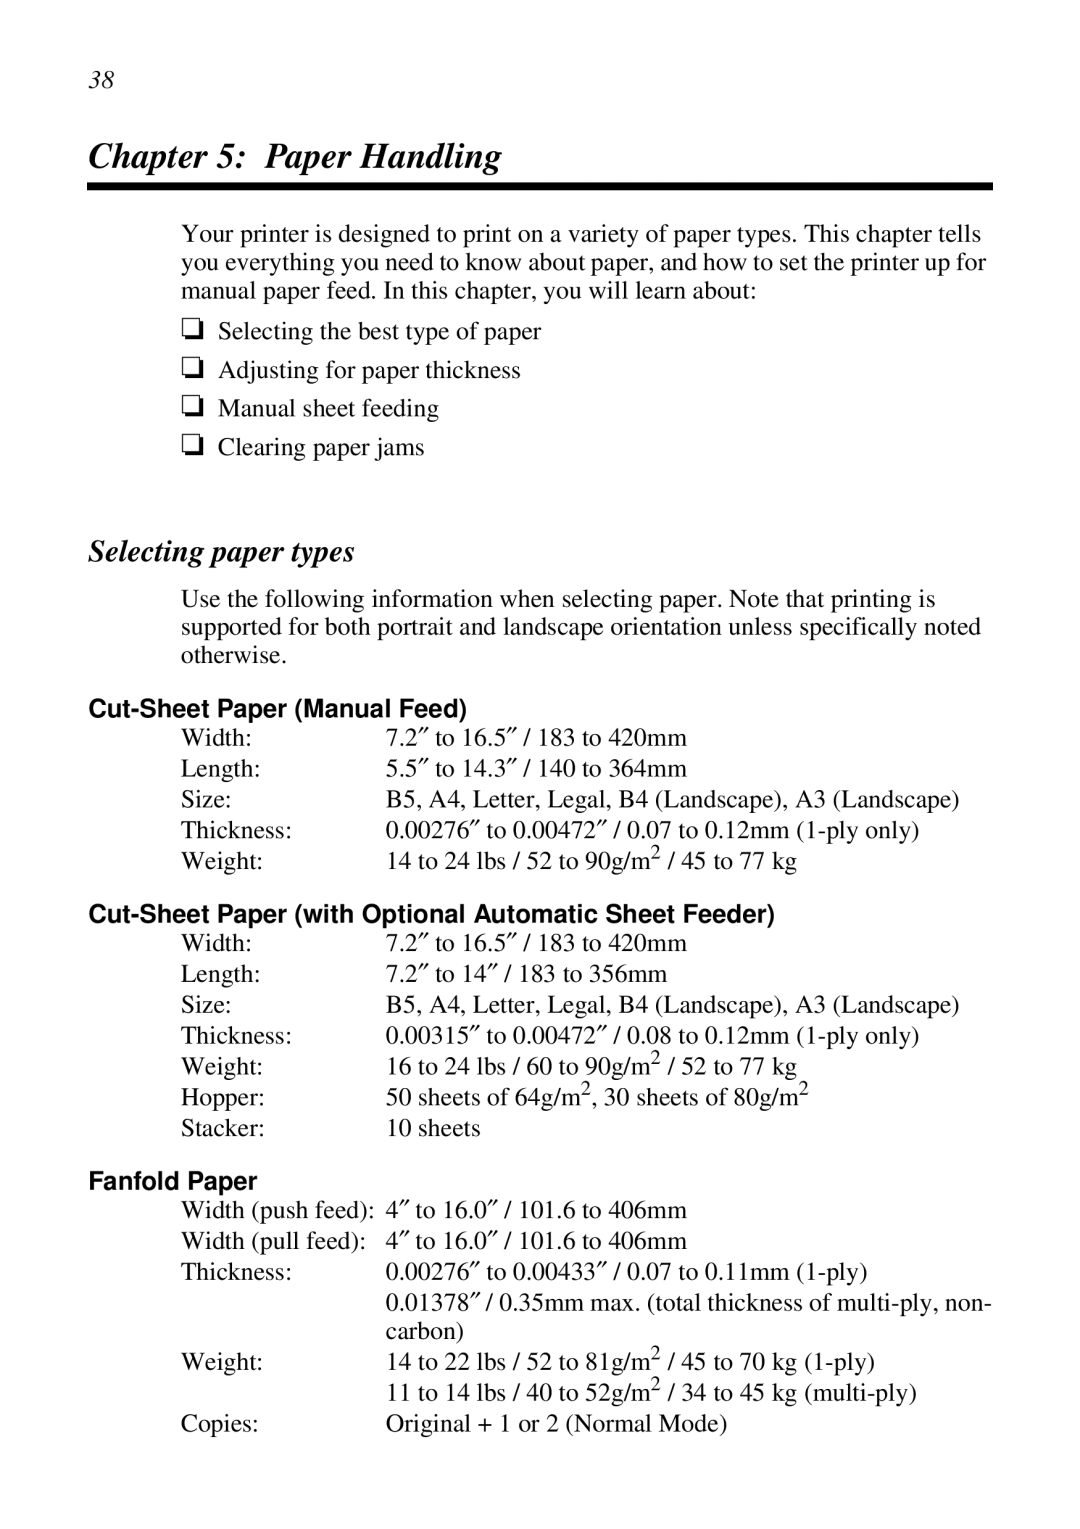 Star Micronics XB24-250 II user manual Paper Handling, Selecting paper types, Cut-Sheet Paper Manual Feed, Fanfold Paper 